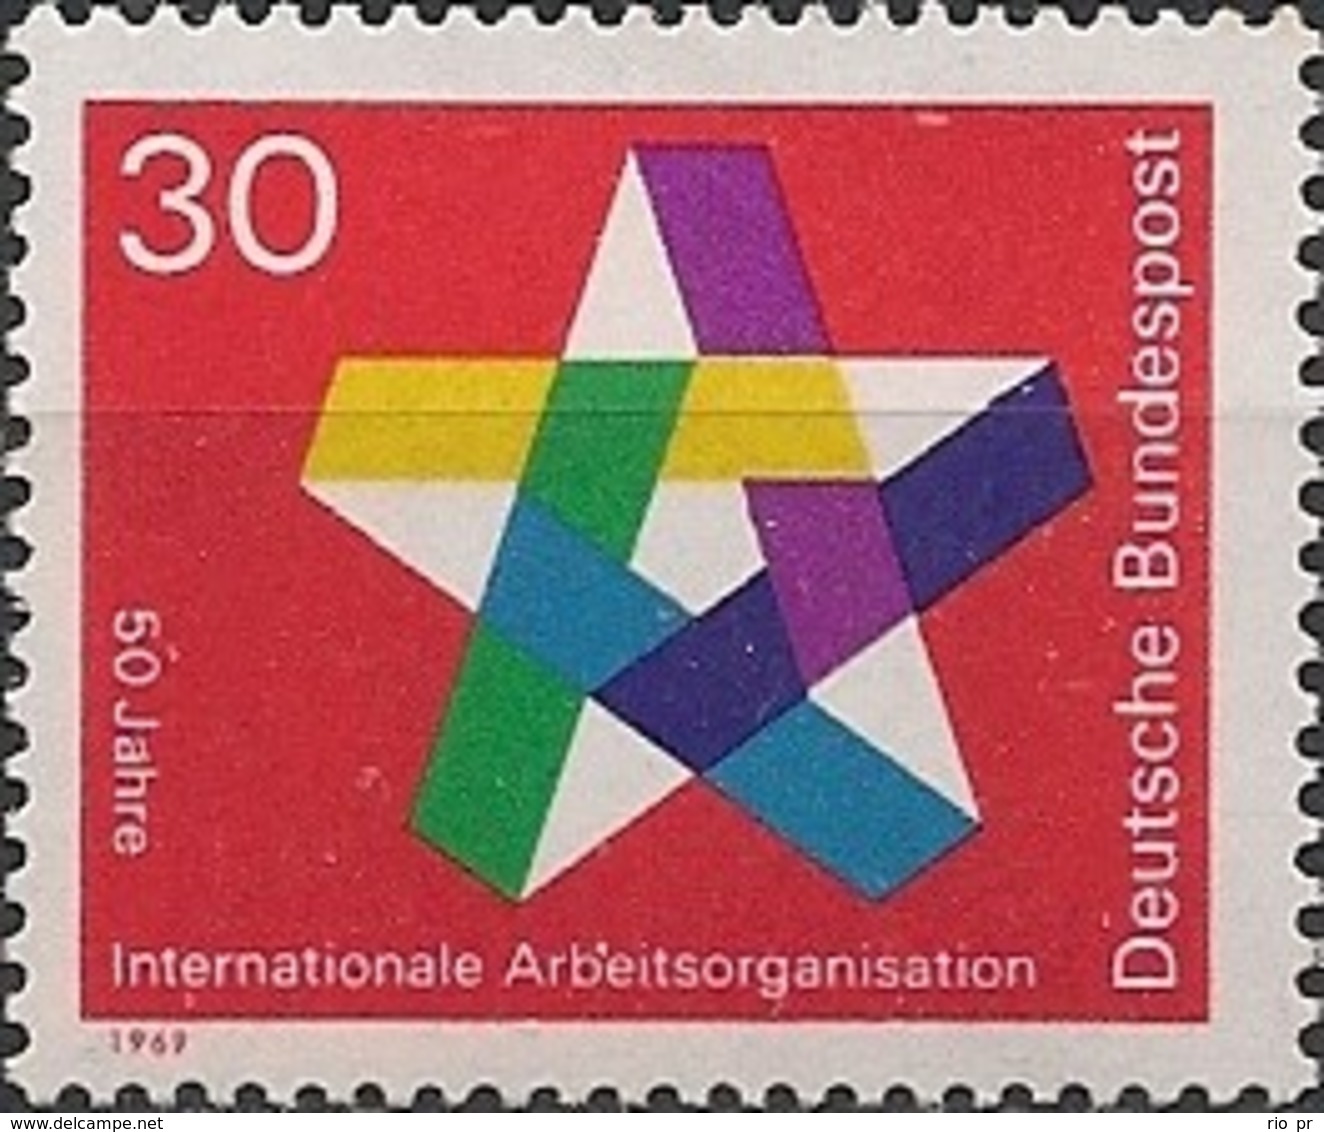 WEST GERMANY (BRD) - 50th ANNIVERSARY OF THE ILO, INTERNATIONAL LABOUR ORGANIZATION 1969 - MNH - ILO